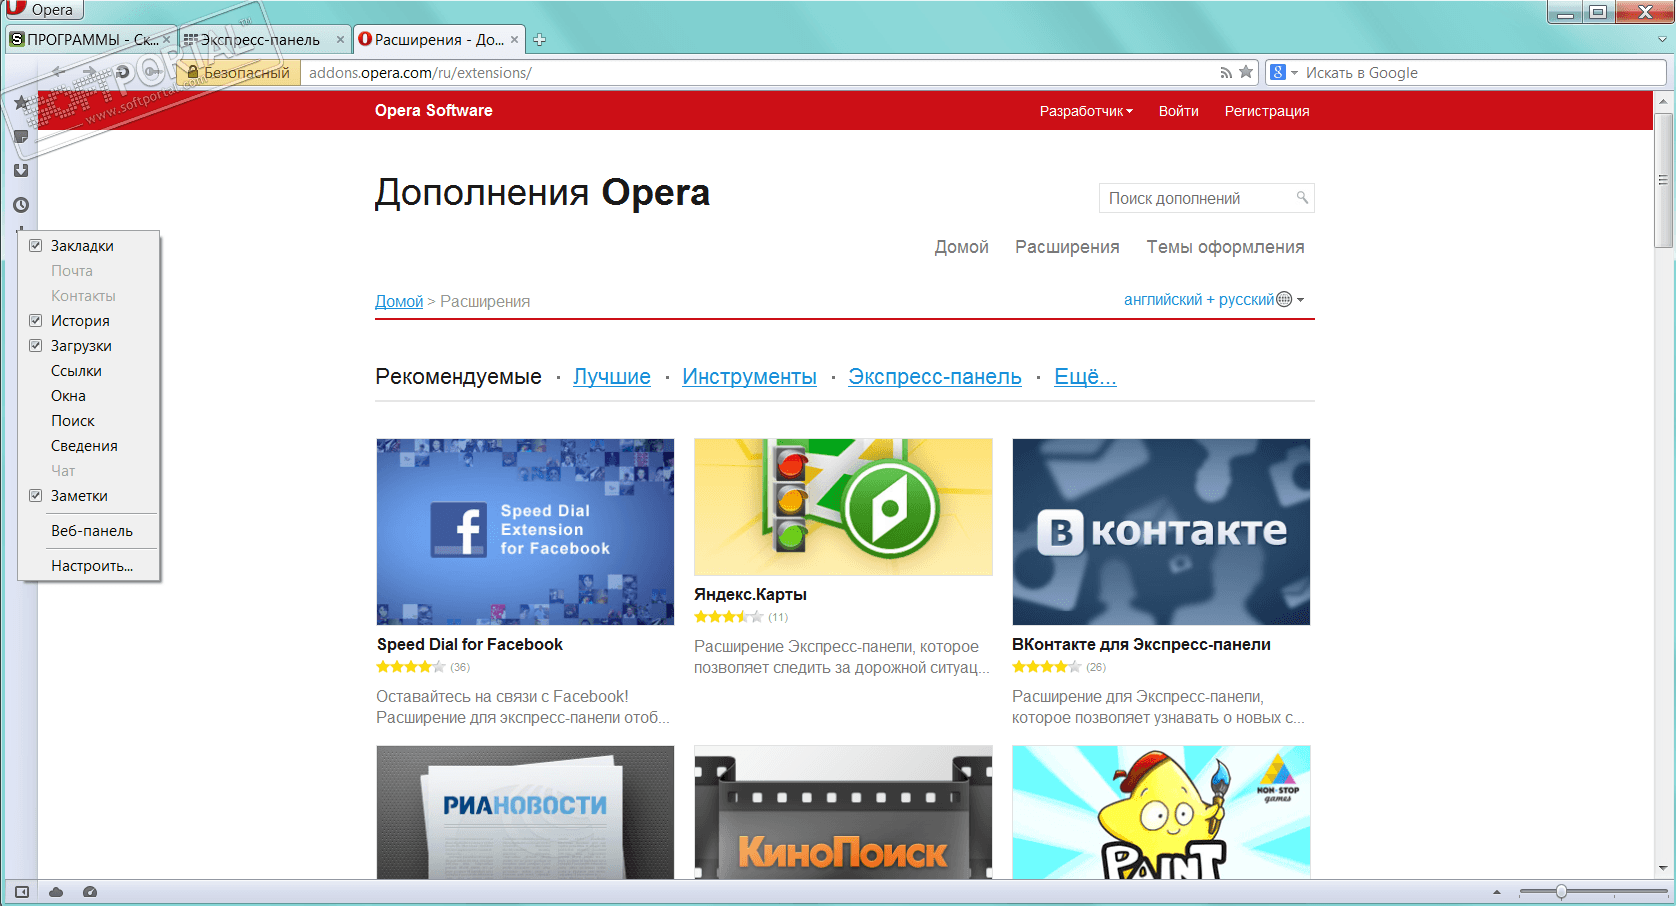 Opera 13 скачать бесплатно opera 13 rus